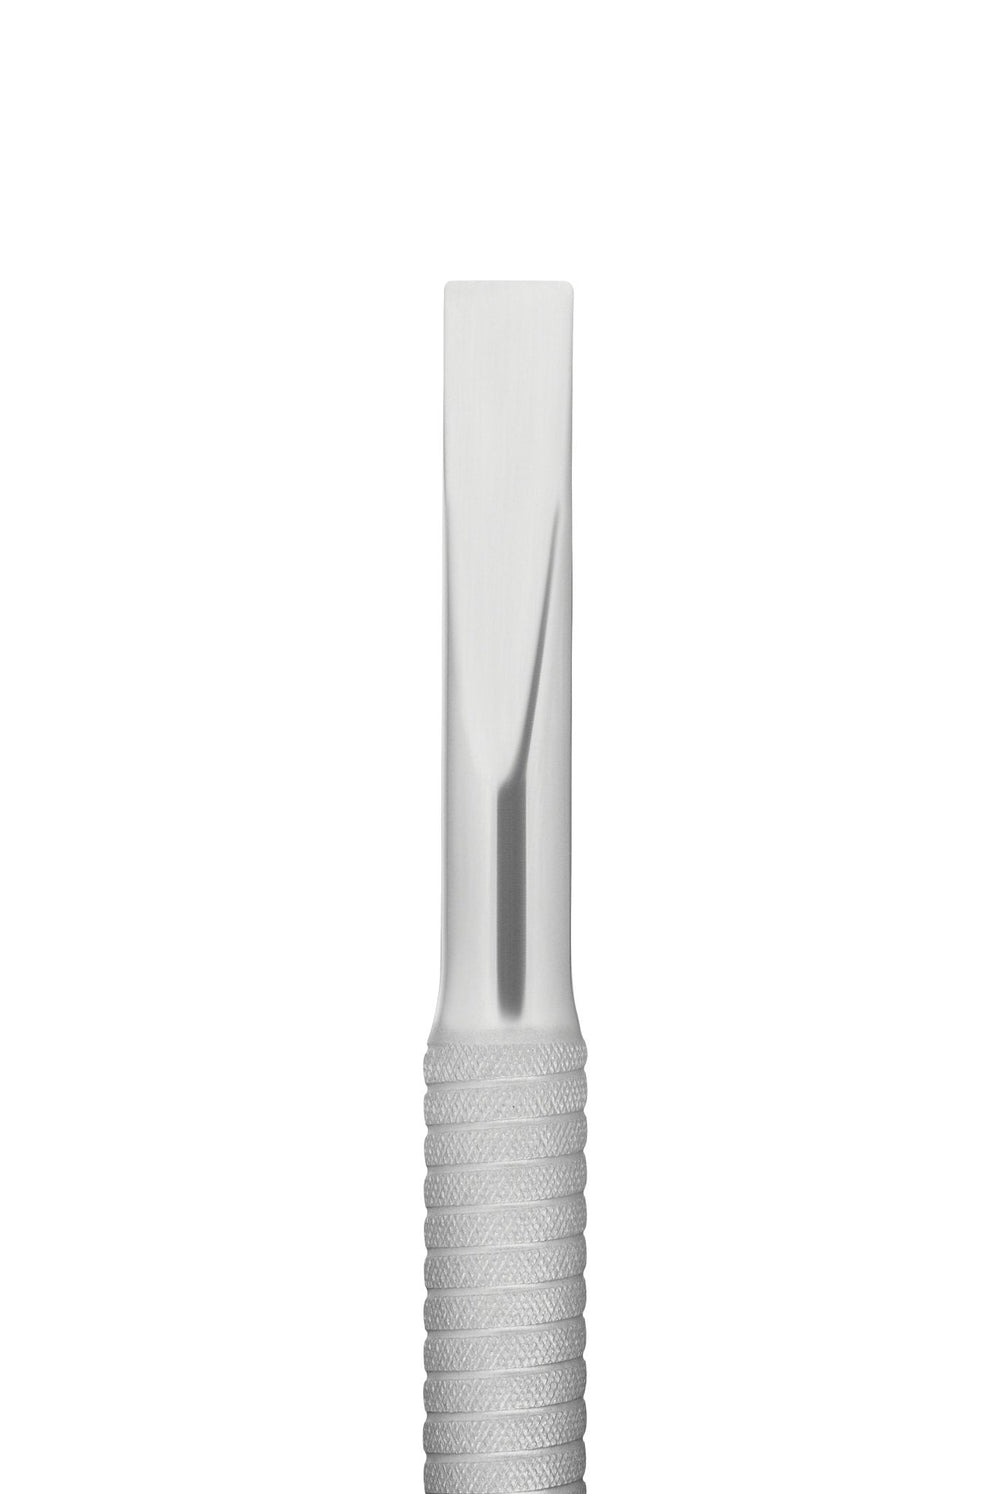 Staleks Double-ended Cuticle Pusher Smart 70 Type 1 | U-tools